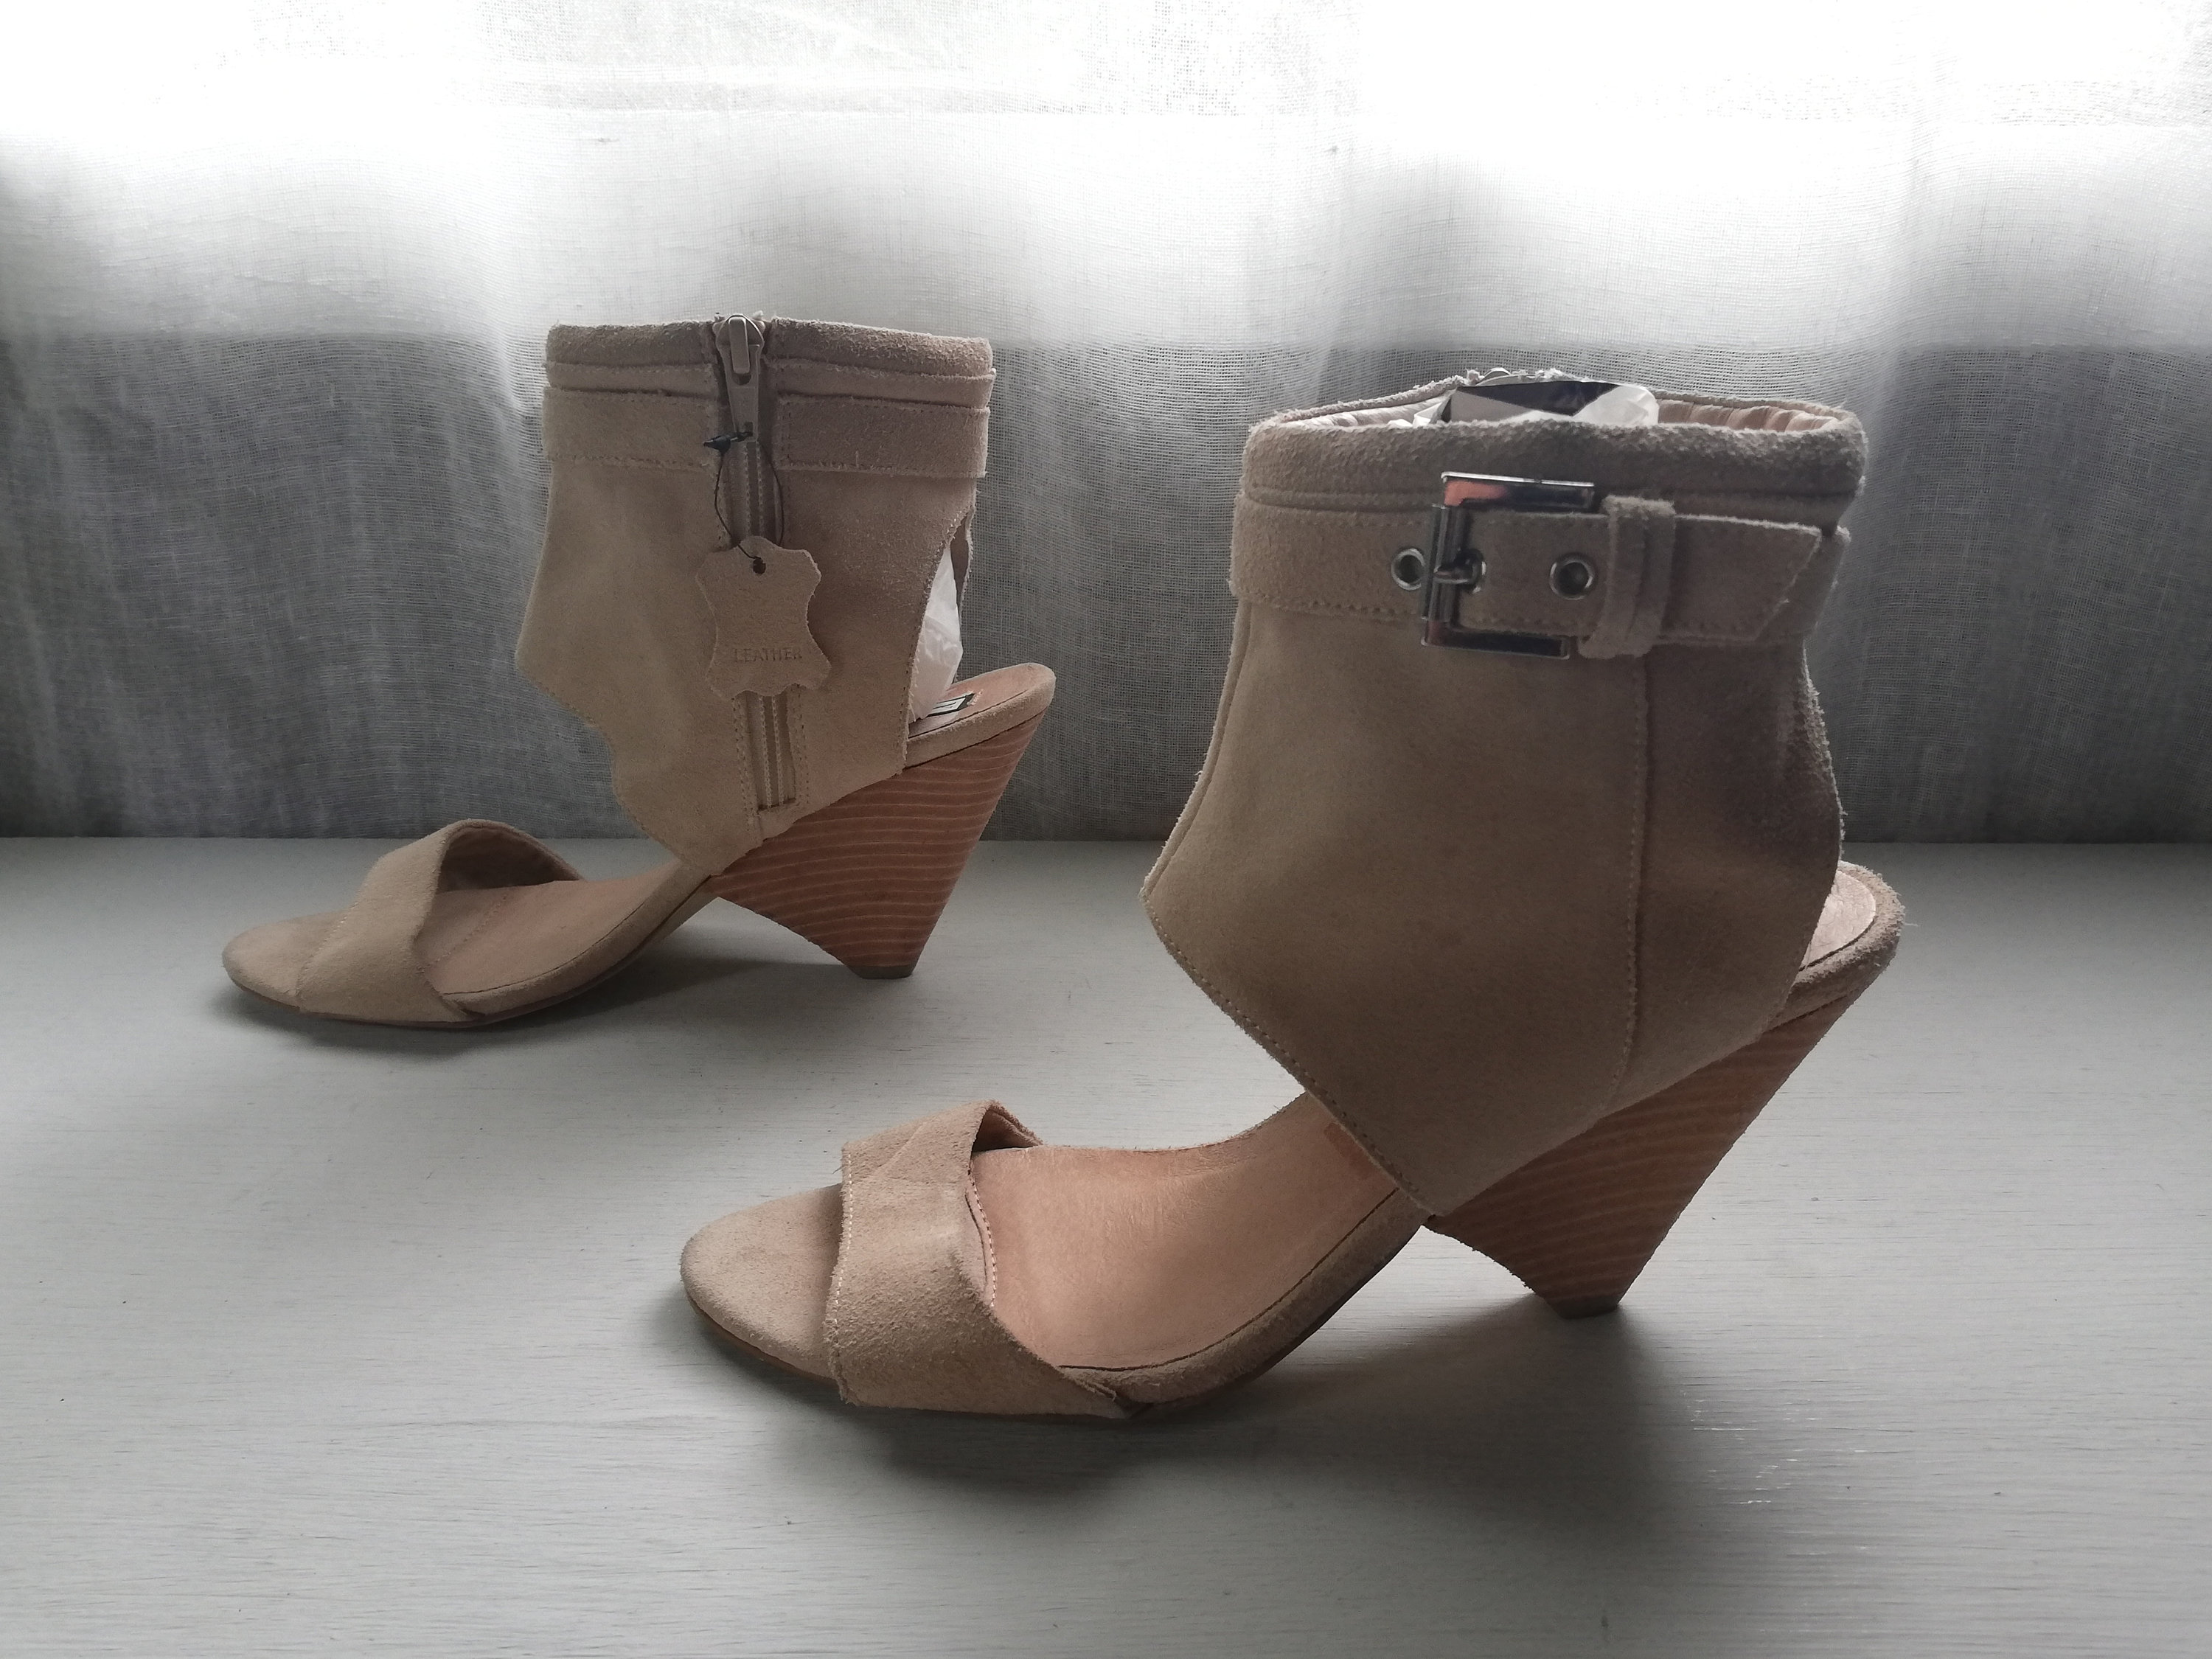 Ugyldigt Stadion Regeneration Women's Suede Shoes XIT Size 38 Eur 7.5 Us 5.5 Uk. - Etsy Denmark